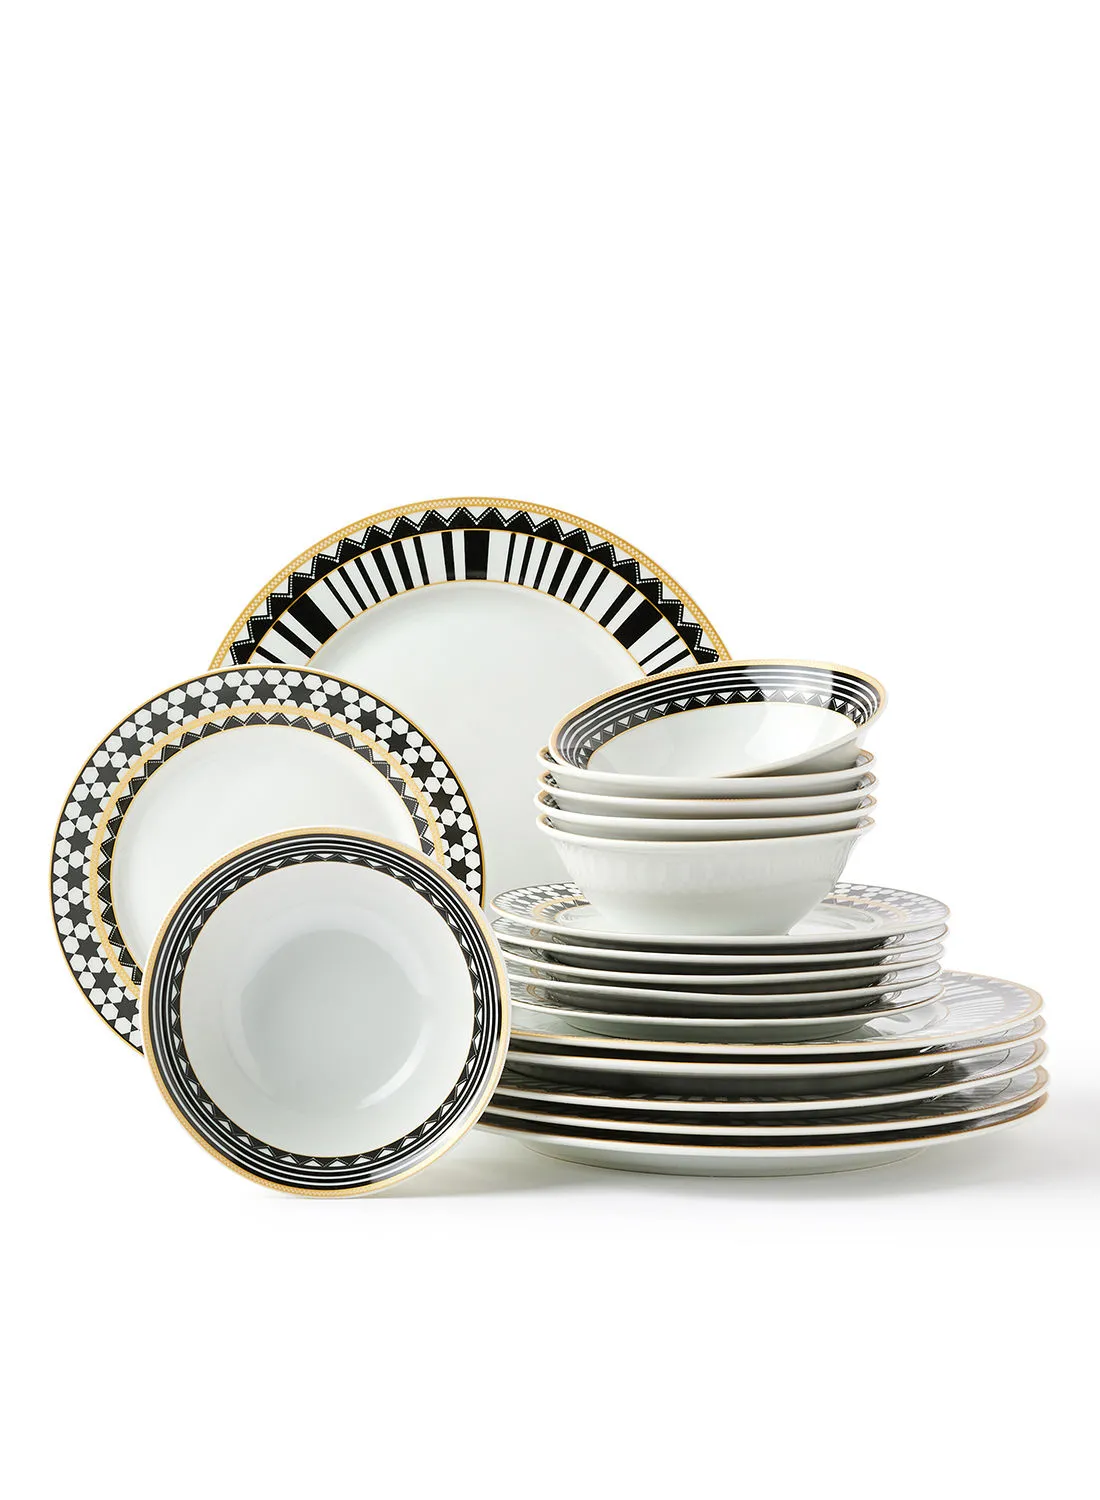 noon east 18 Piece Porcelain Dinner Set - Dishes, Plates - Dinner Plate, Side Plate, Bowl - Serves 6 - Printed Design Celestial